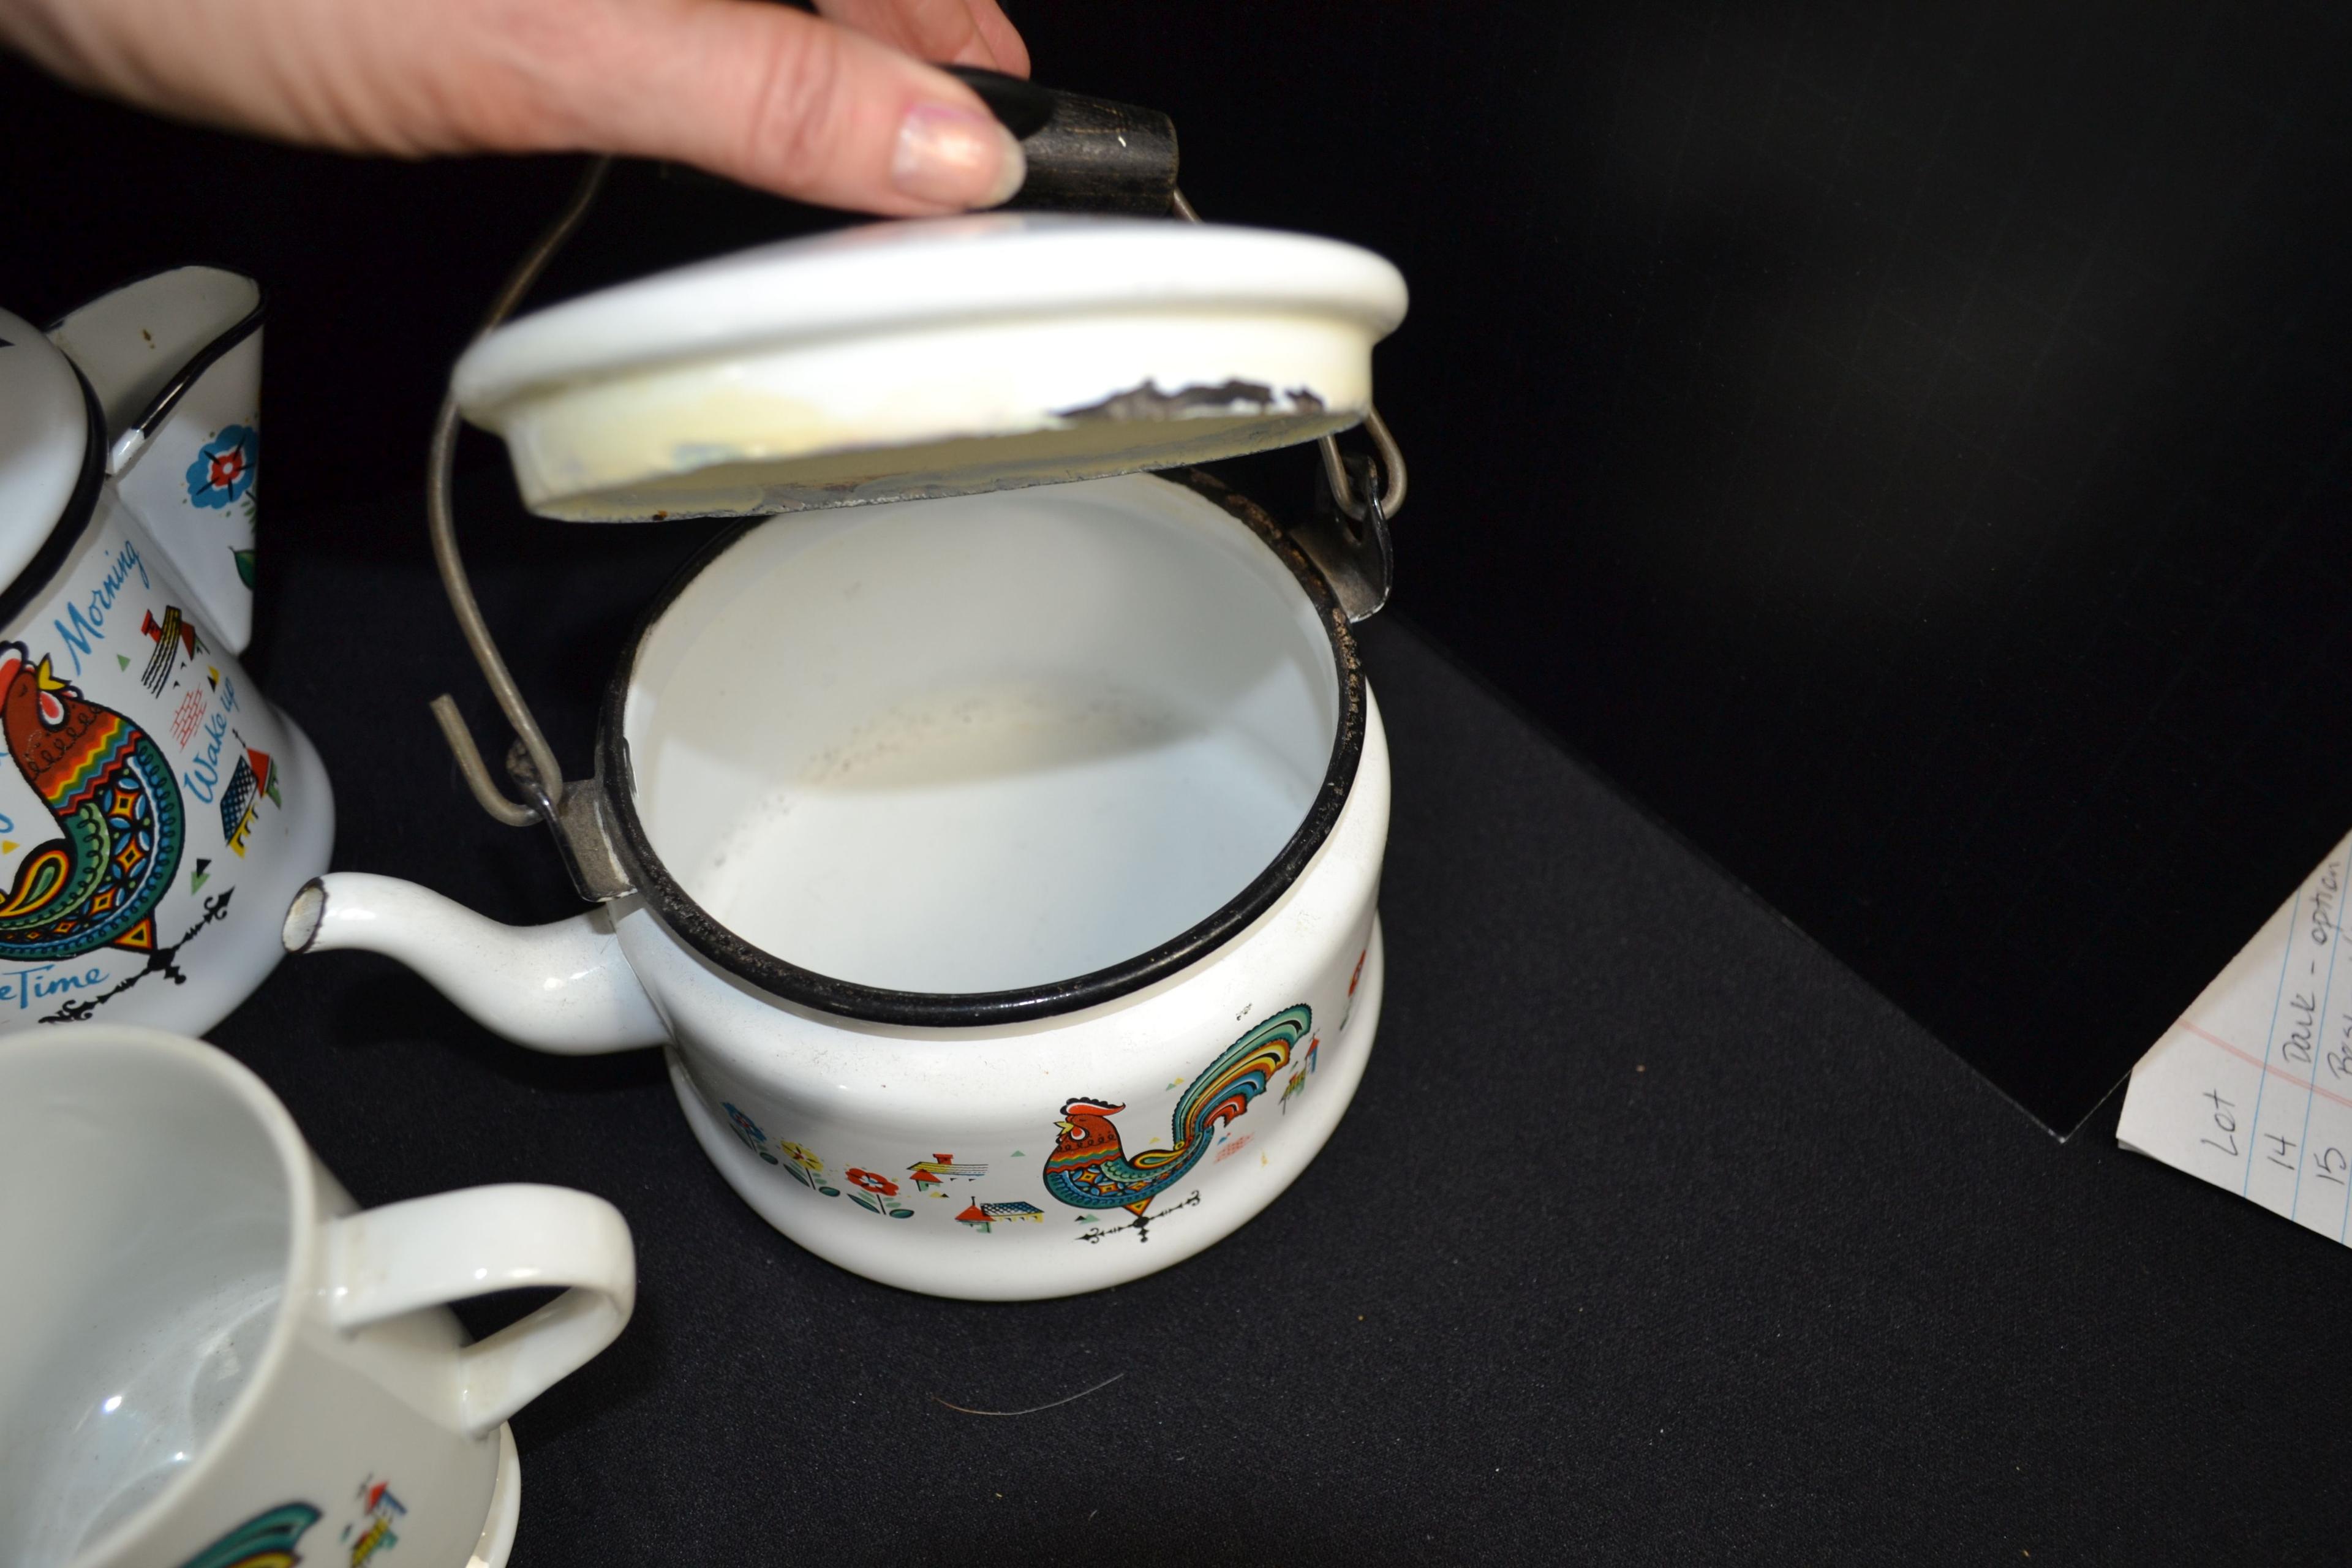 Vintage Rooster Pattern Enameled Coffee Pot, Tea Pot, Small Coffee Pot w/Insides by Berggren, Salt a